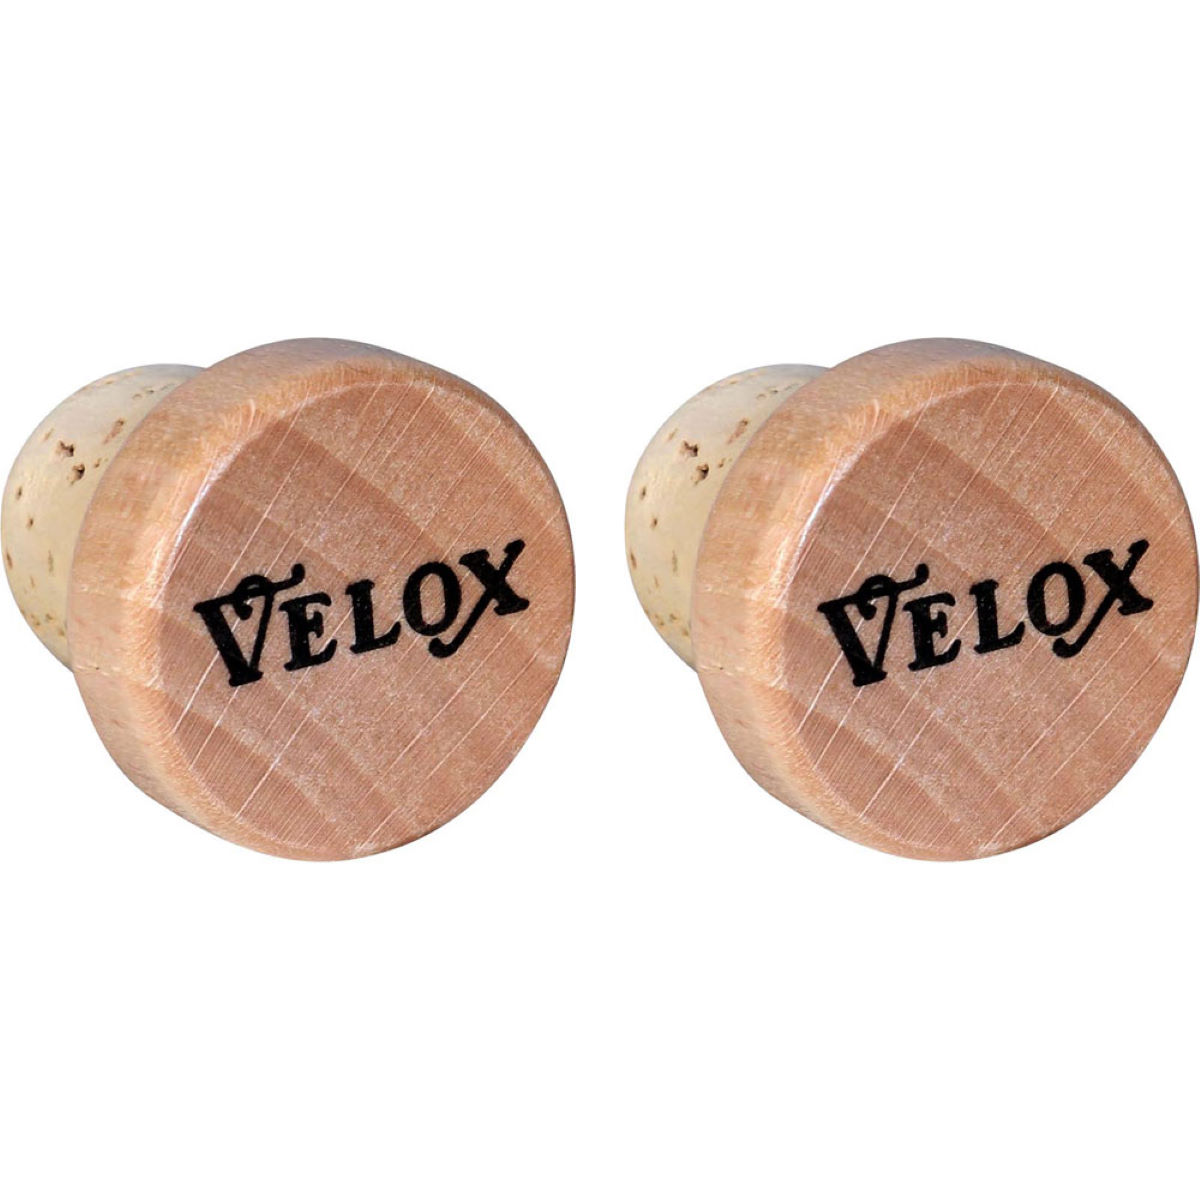 Velox Wine Cork Bar End Plugs - Regalos